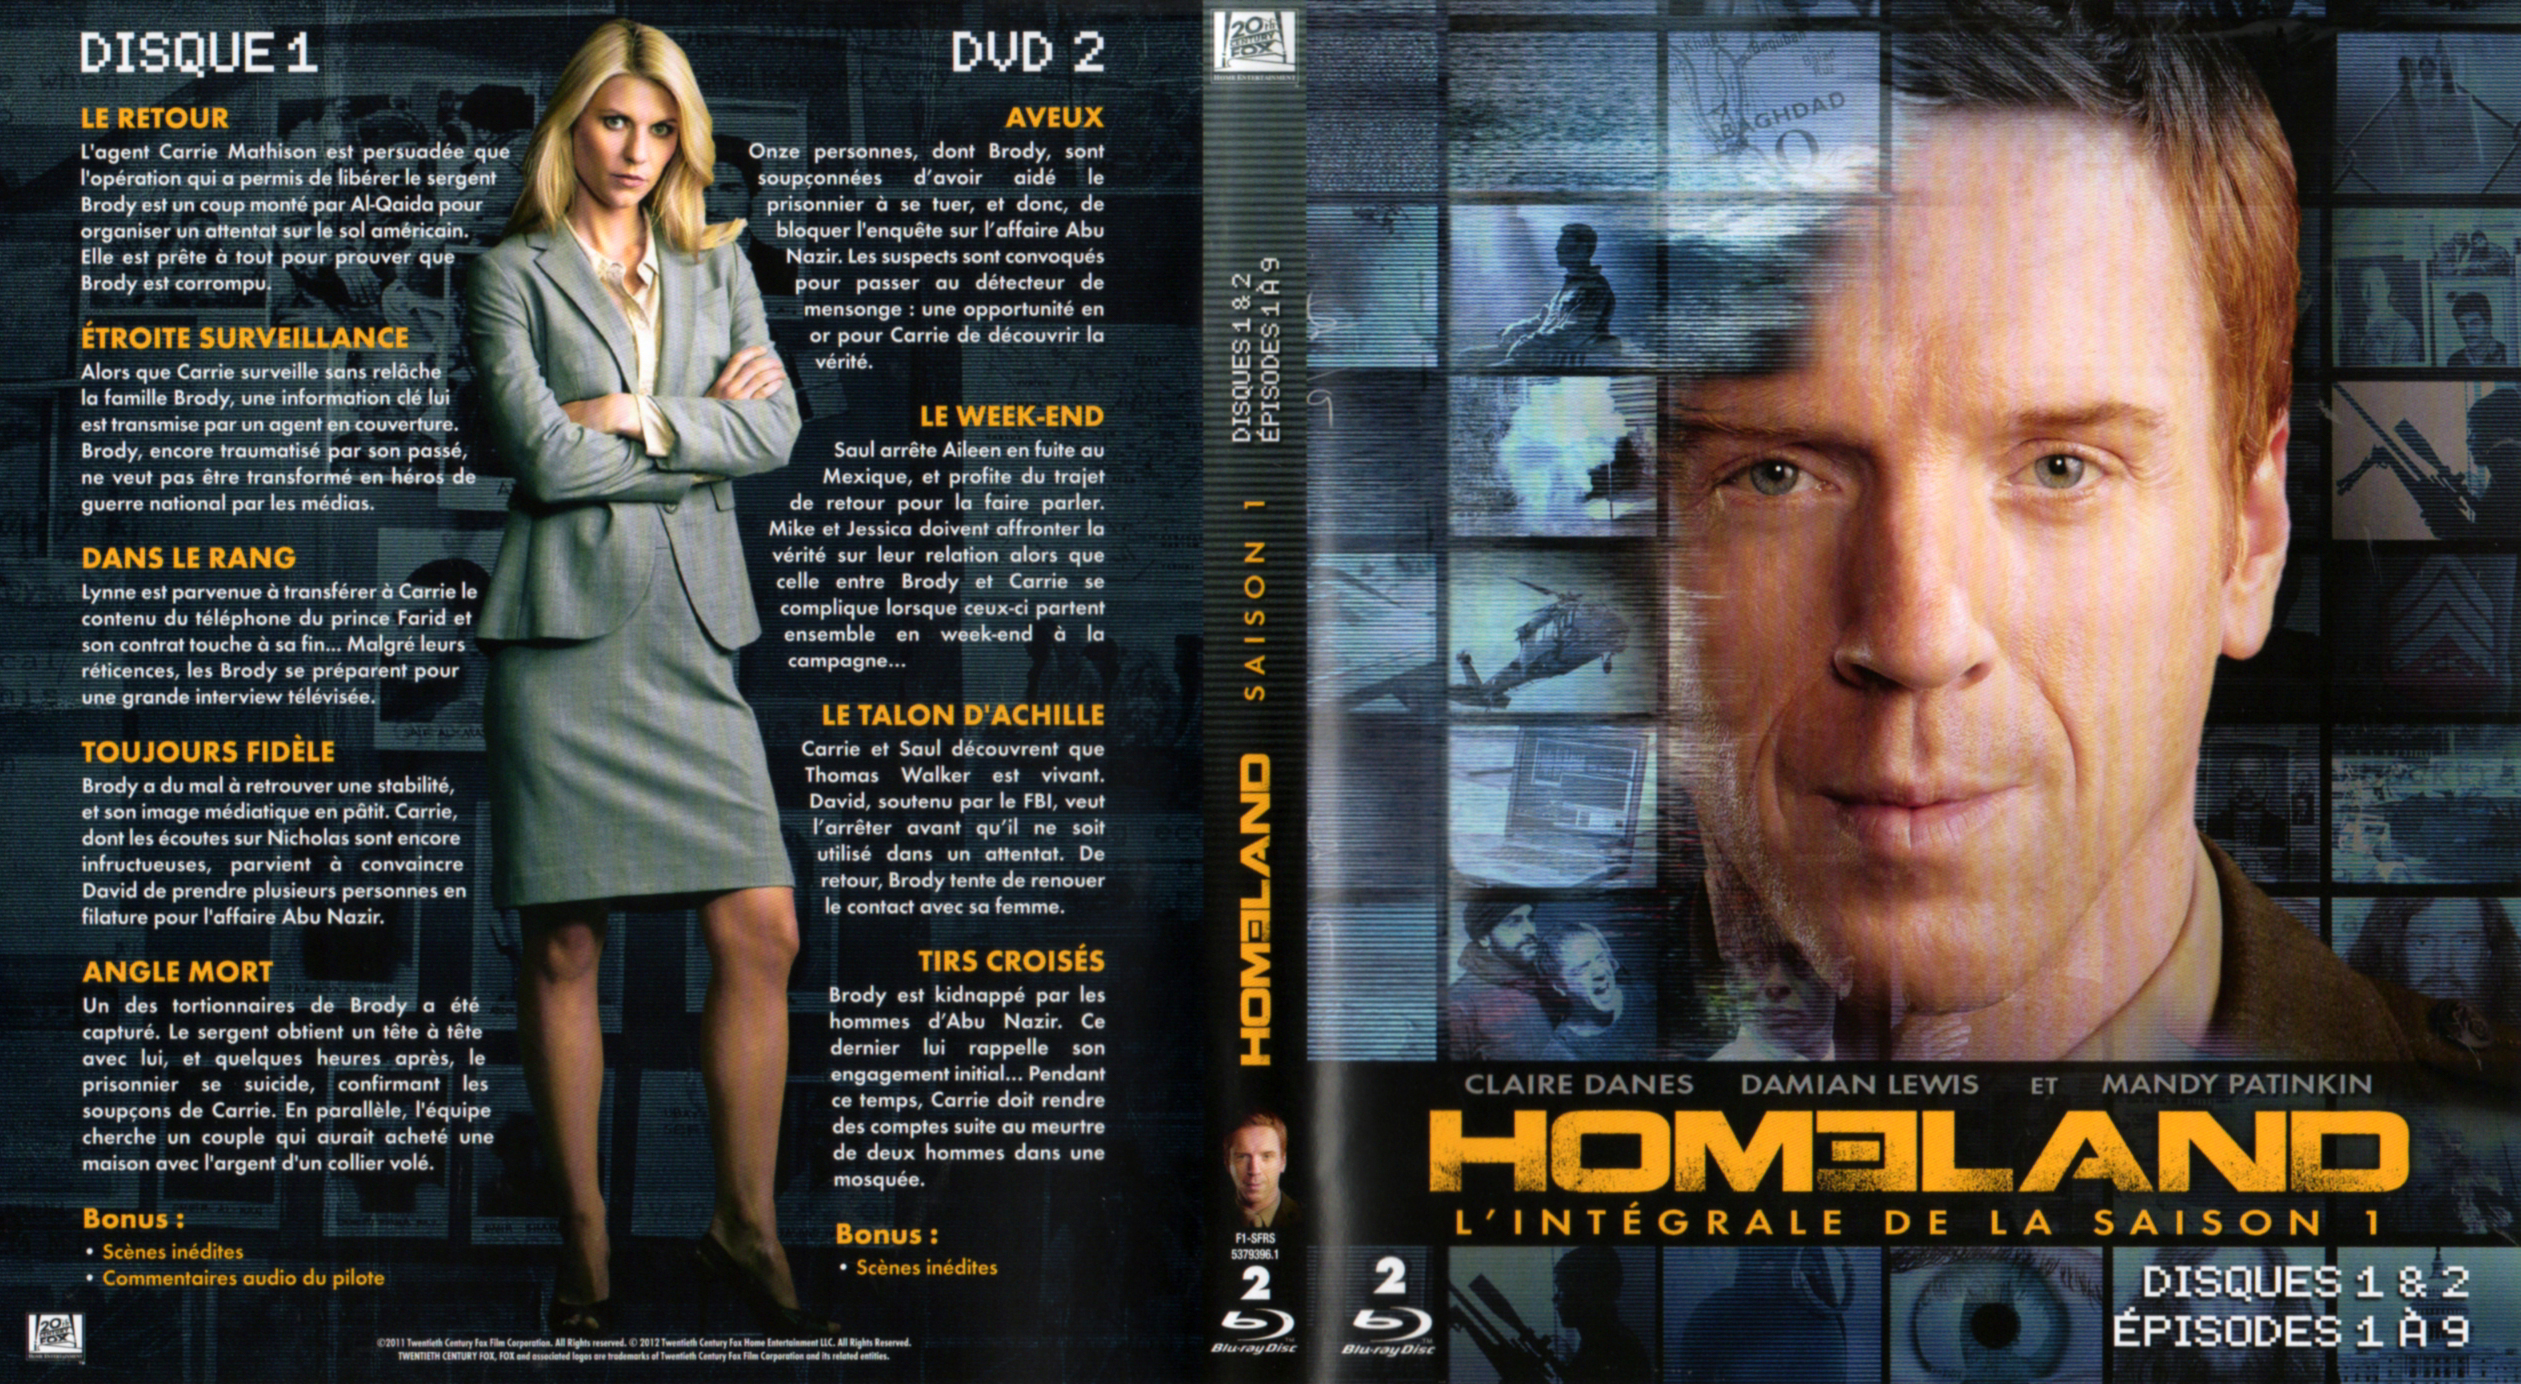 Jaquette DVD Homeland saison 1 DISC 1 (BLU-RAY)